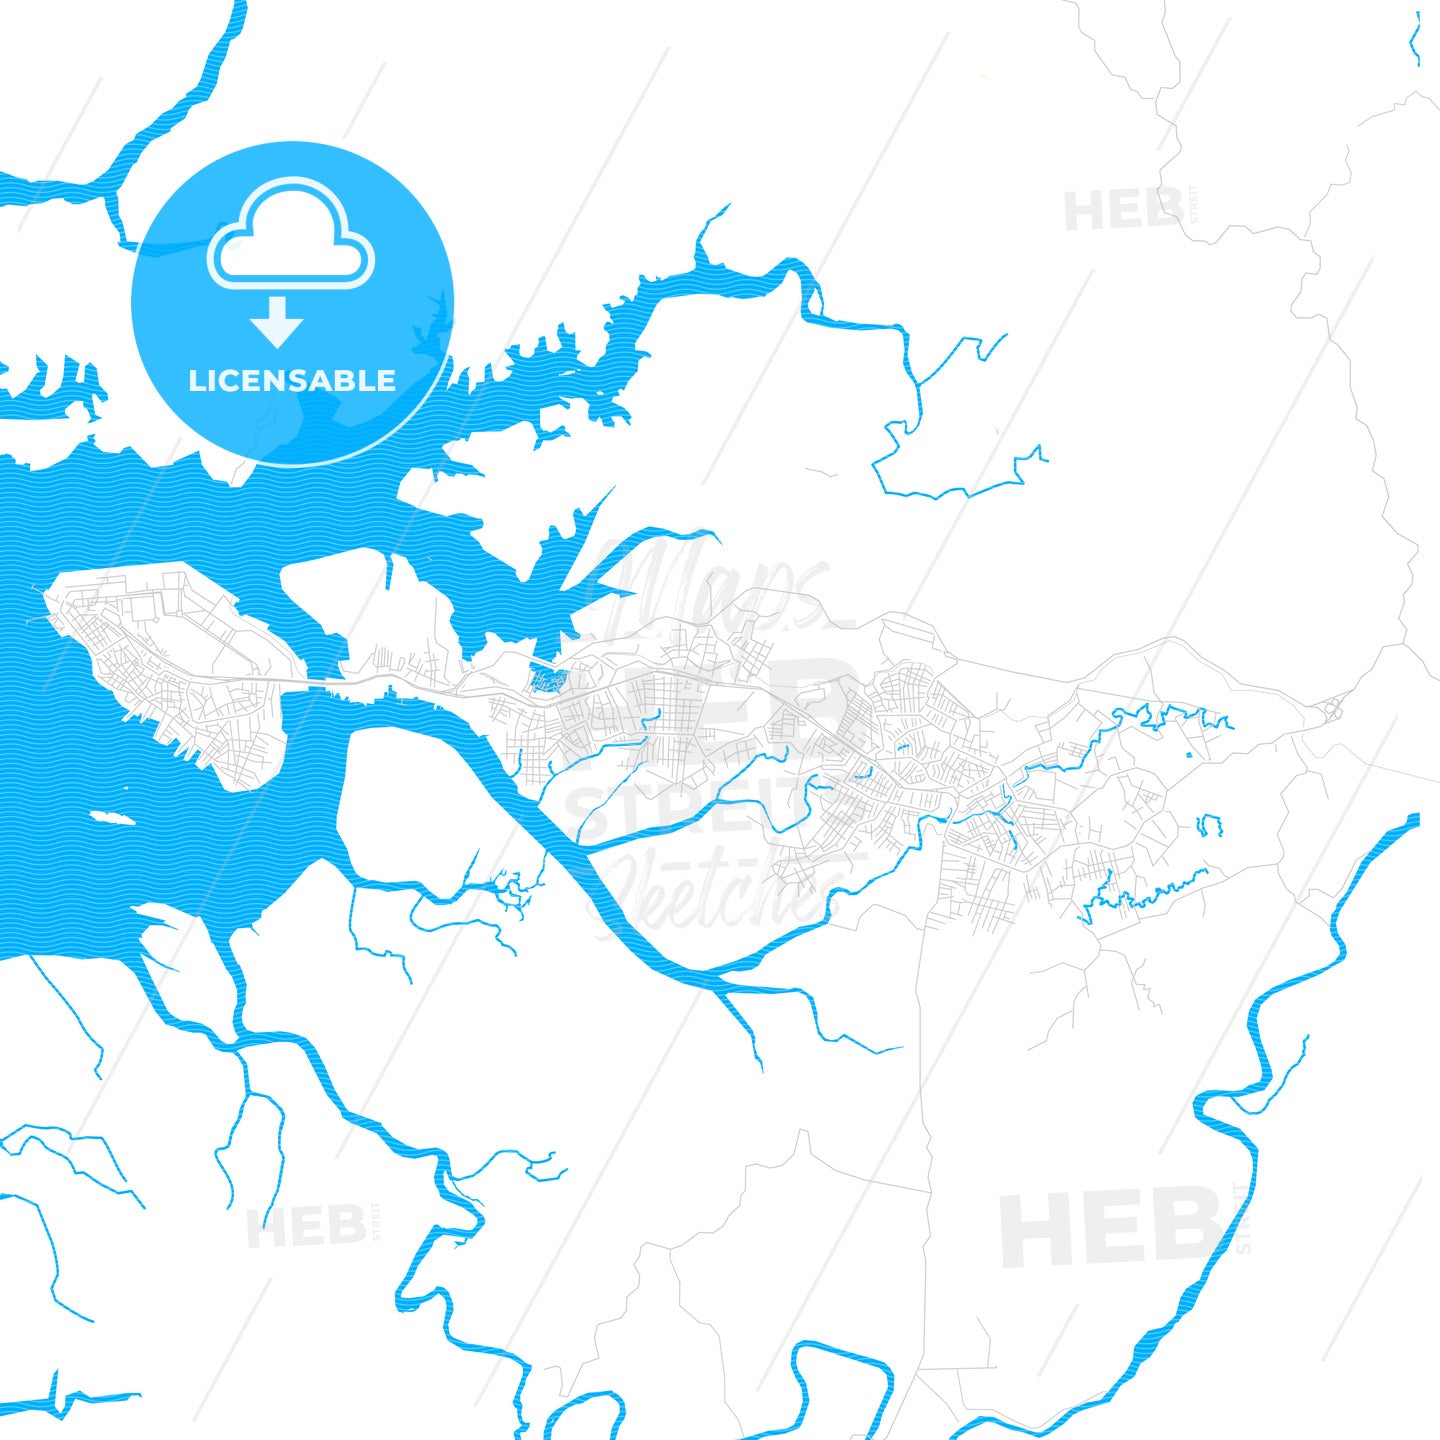 Buenaventura, Colombia PDF vector map with water in focus